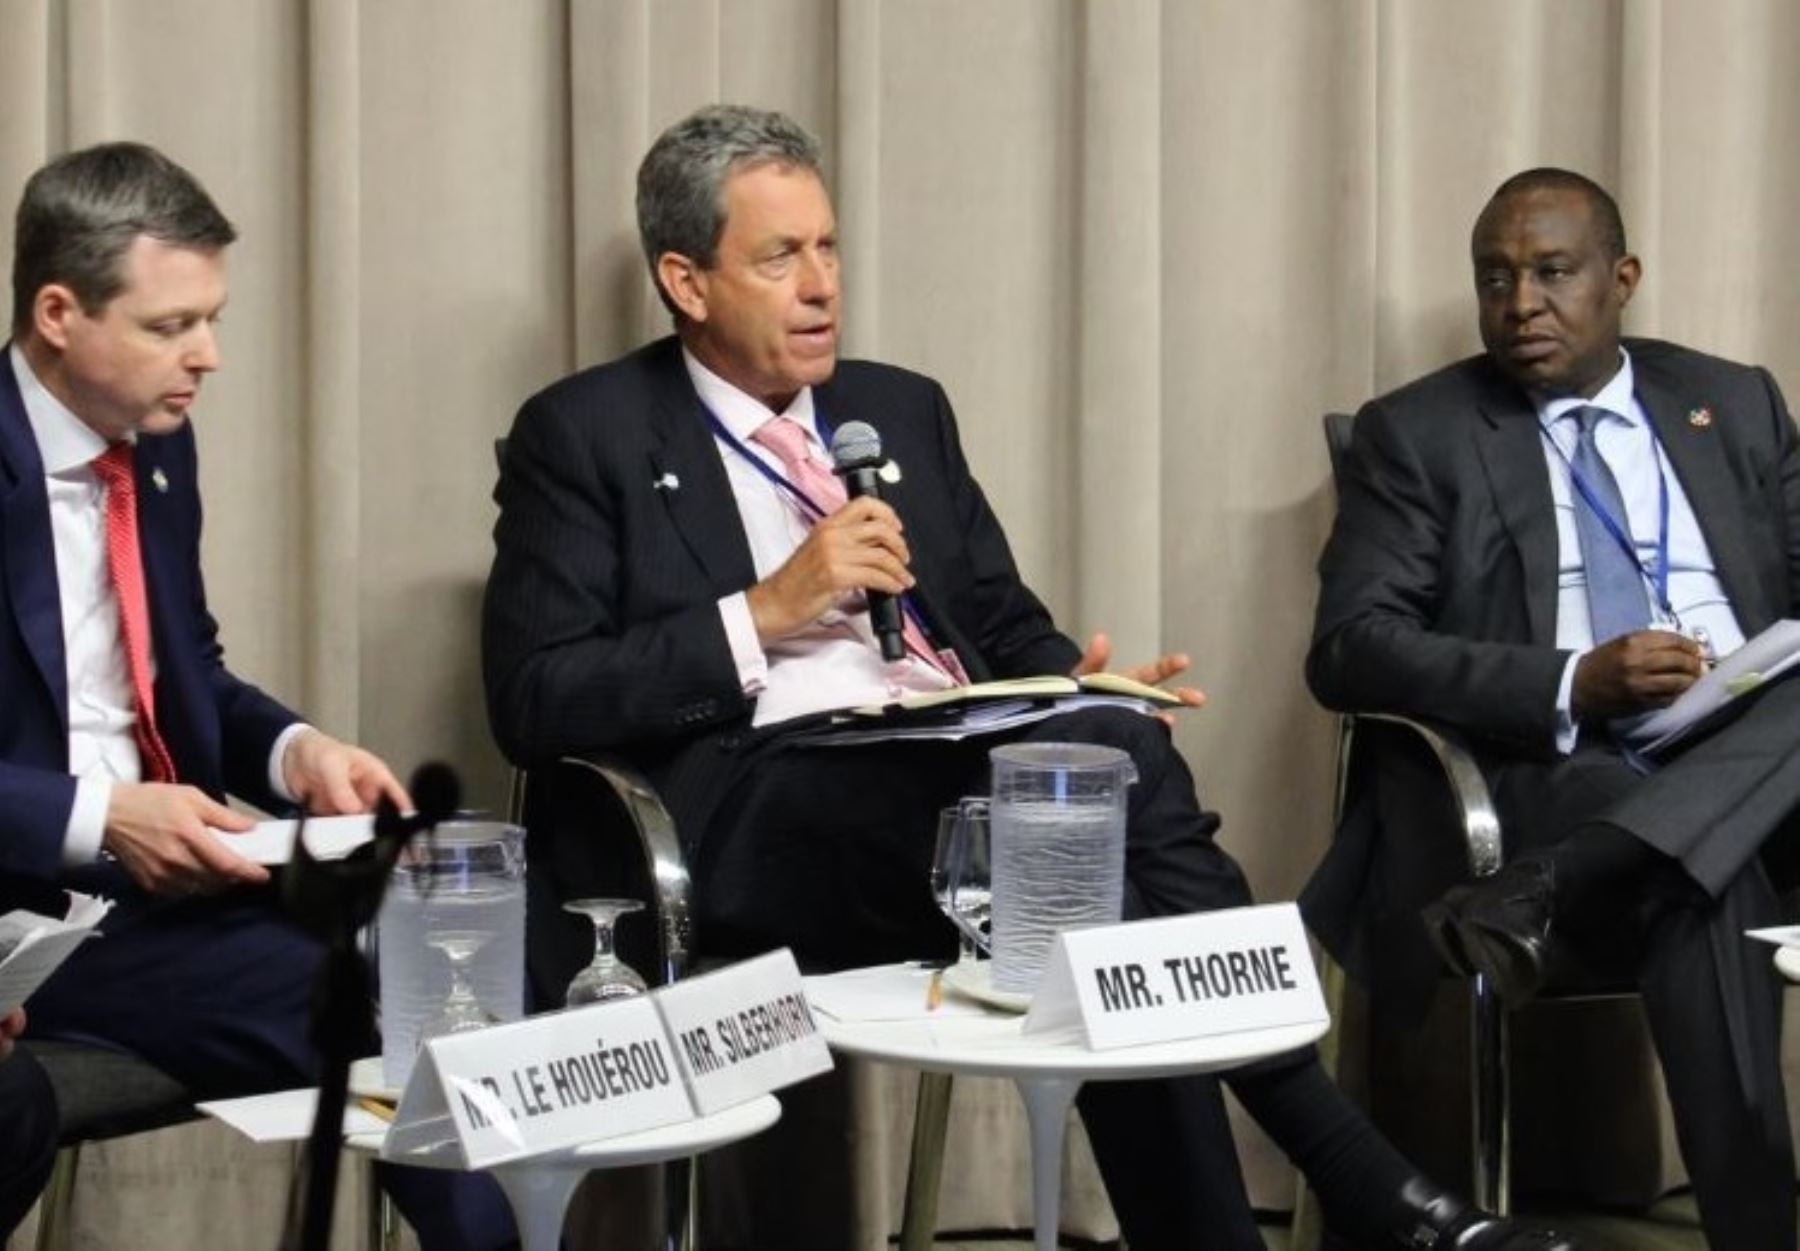 Ministro Thorne participa en evento del Banco Mundial en Washington sobre mercado de capitales. Foto: Banco Mundial.